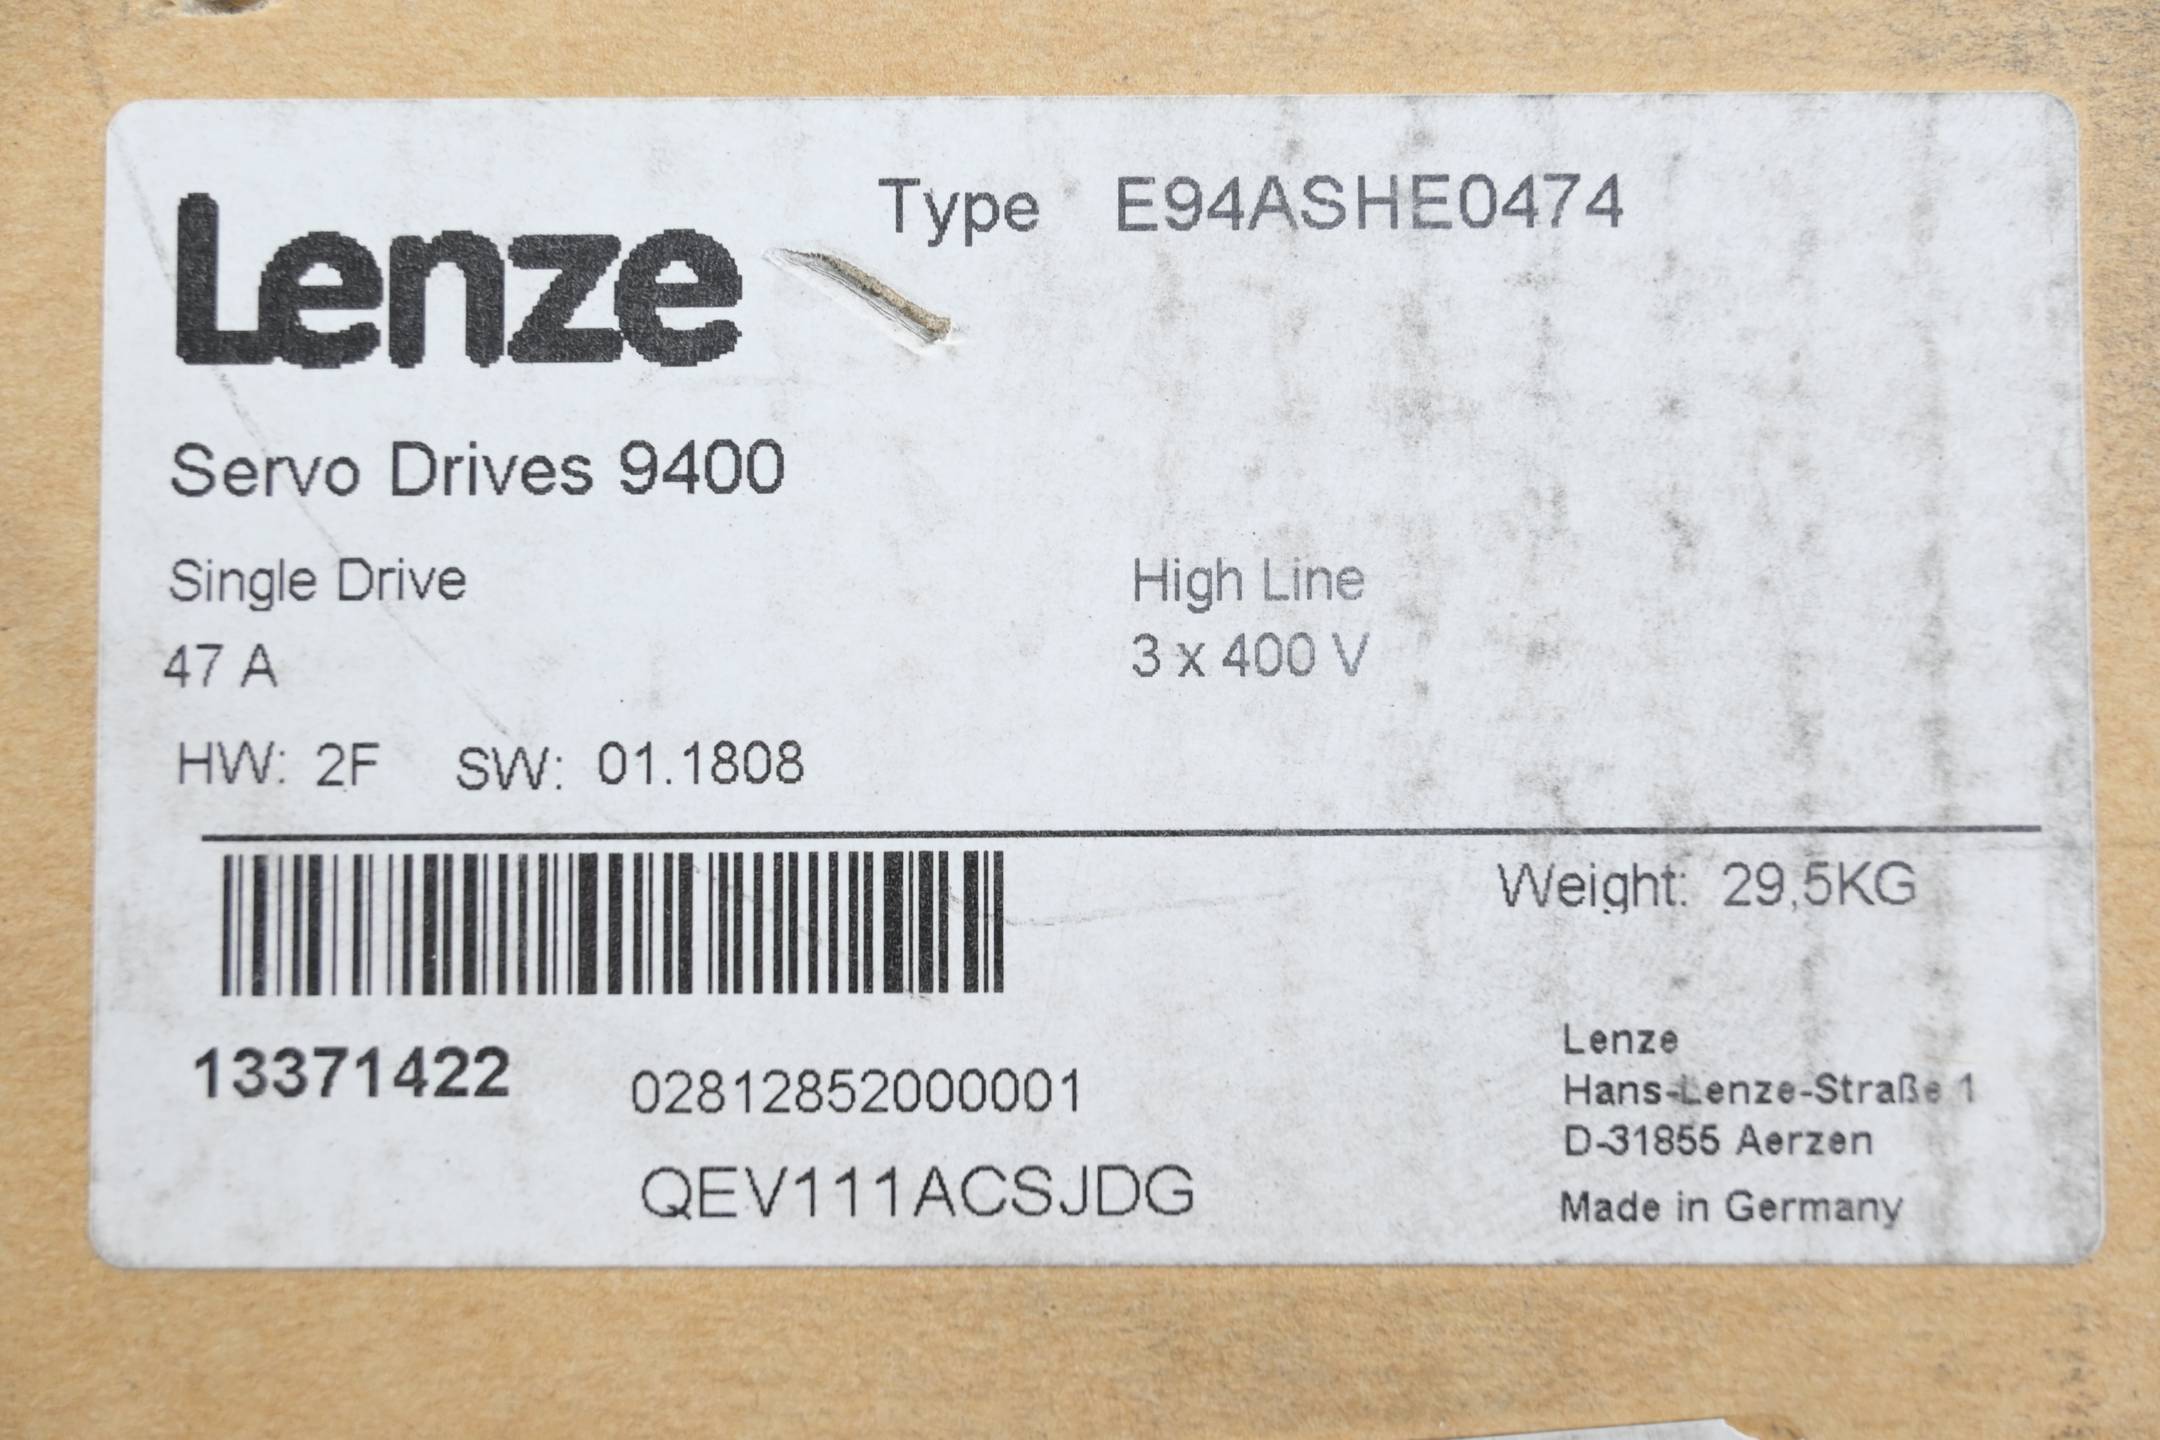 Lenze Servo Drives 9400 Singe Drive E94ASHE0474 ( HW: 2F SW: 01.1808 )